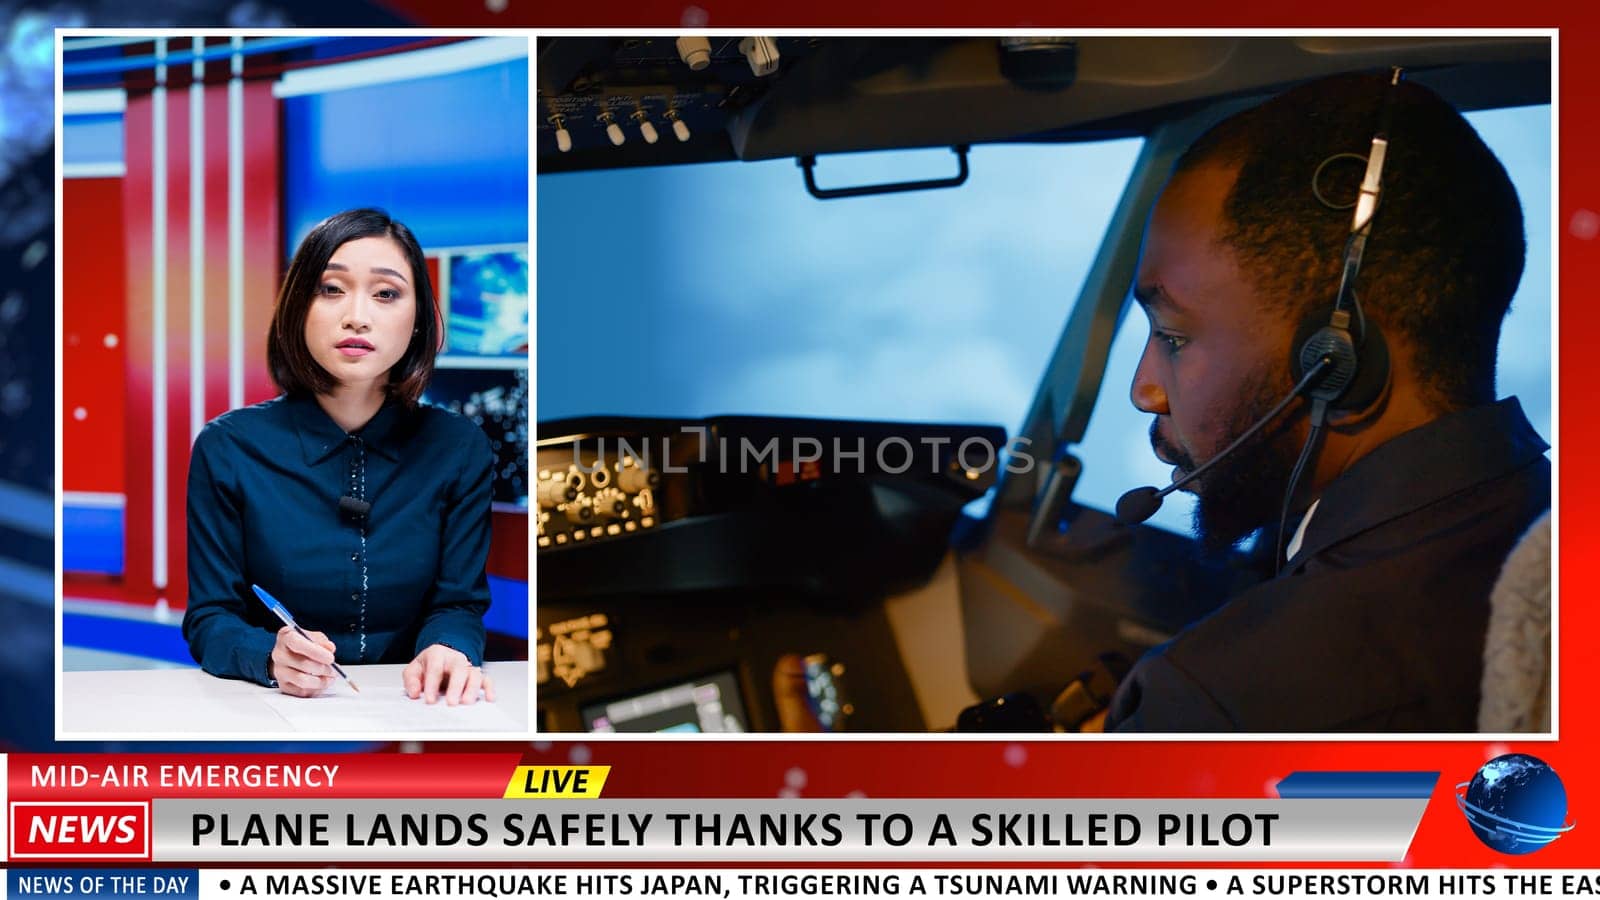 Media presenter talks about pilot hero by DCStudio